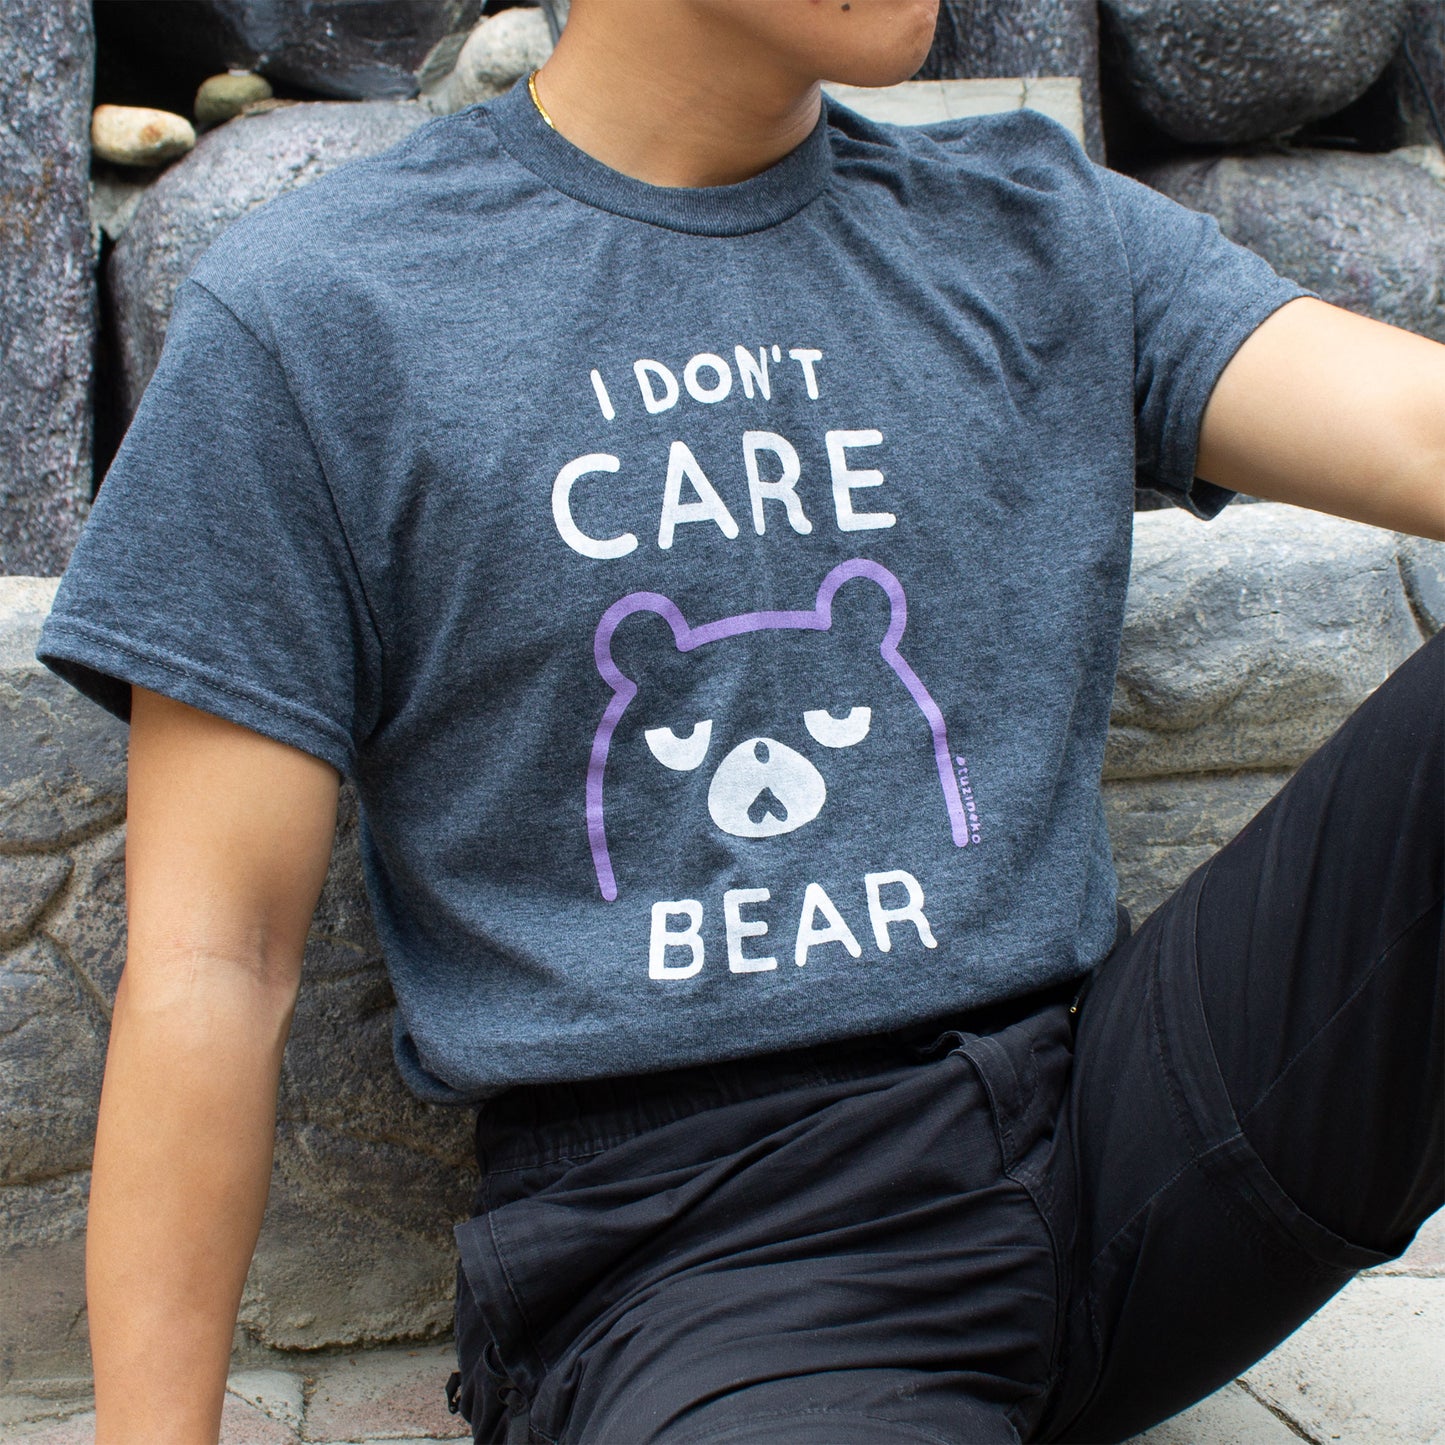 Grumpy Gom "I Don't Care Bear" Unisex T-Shirt